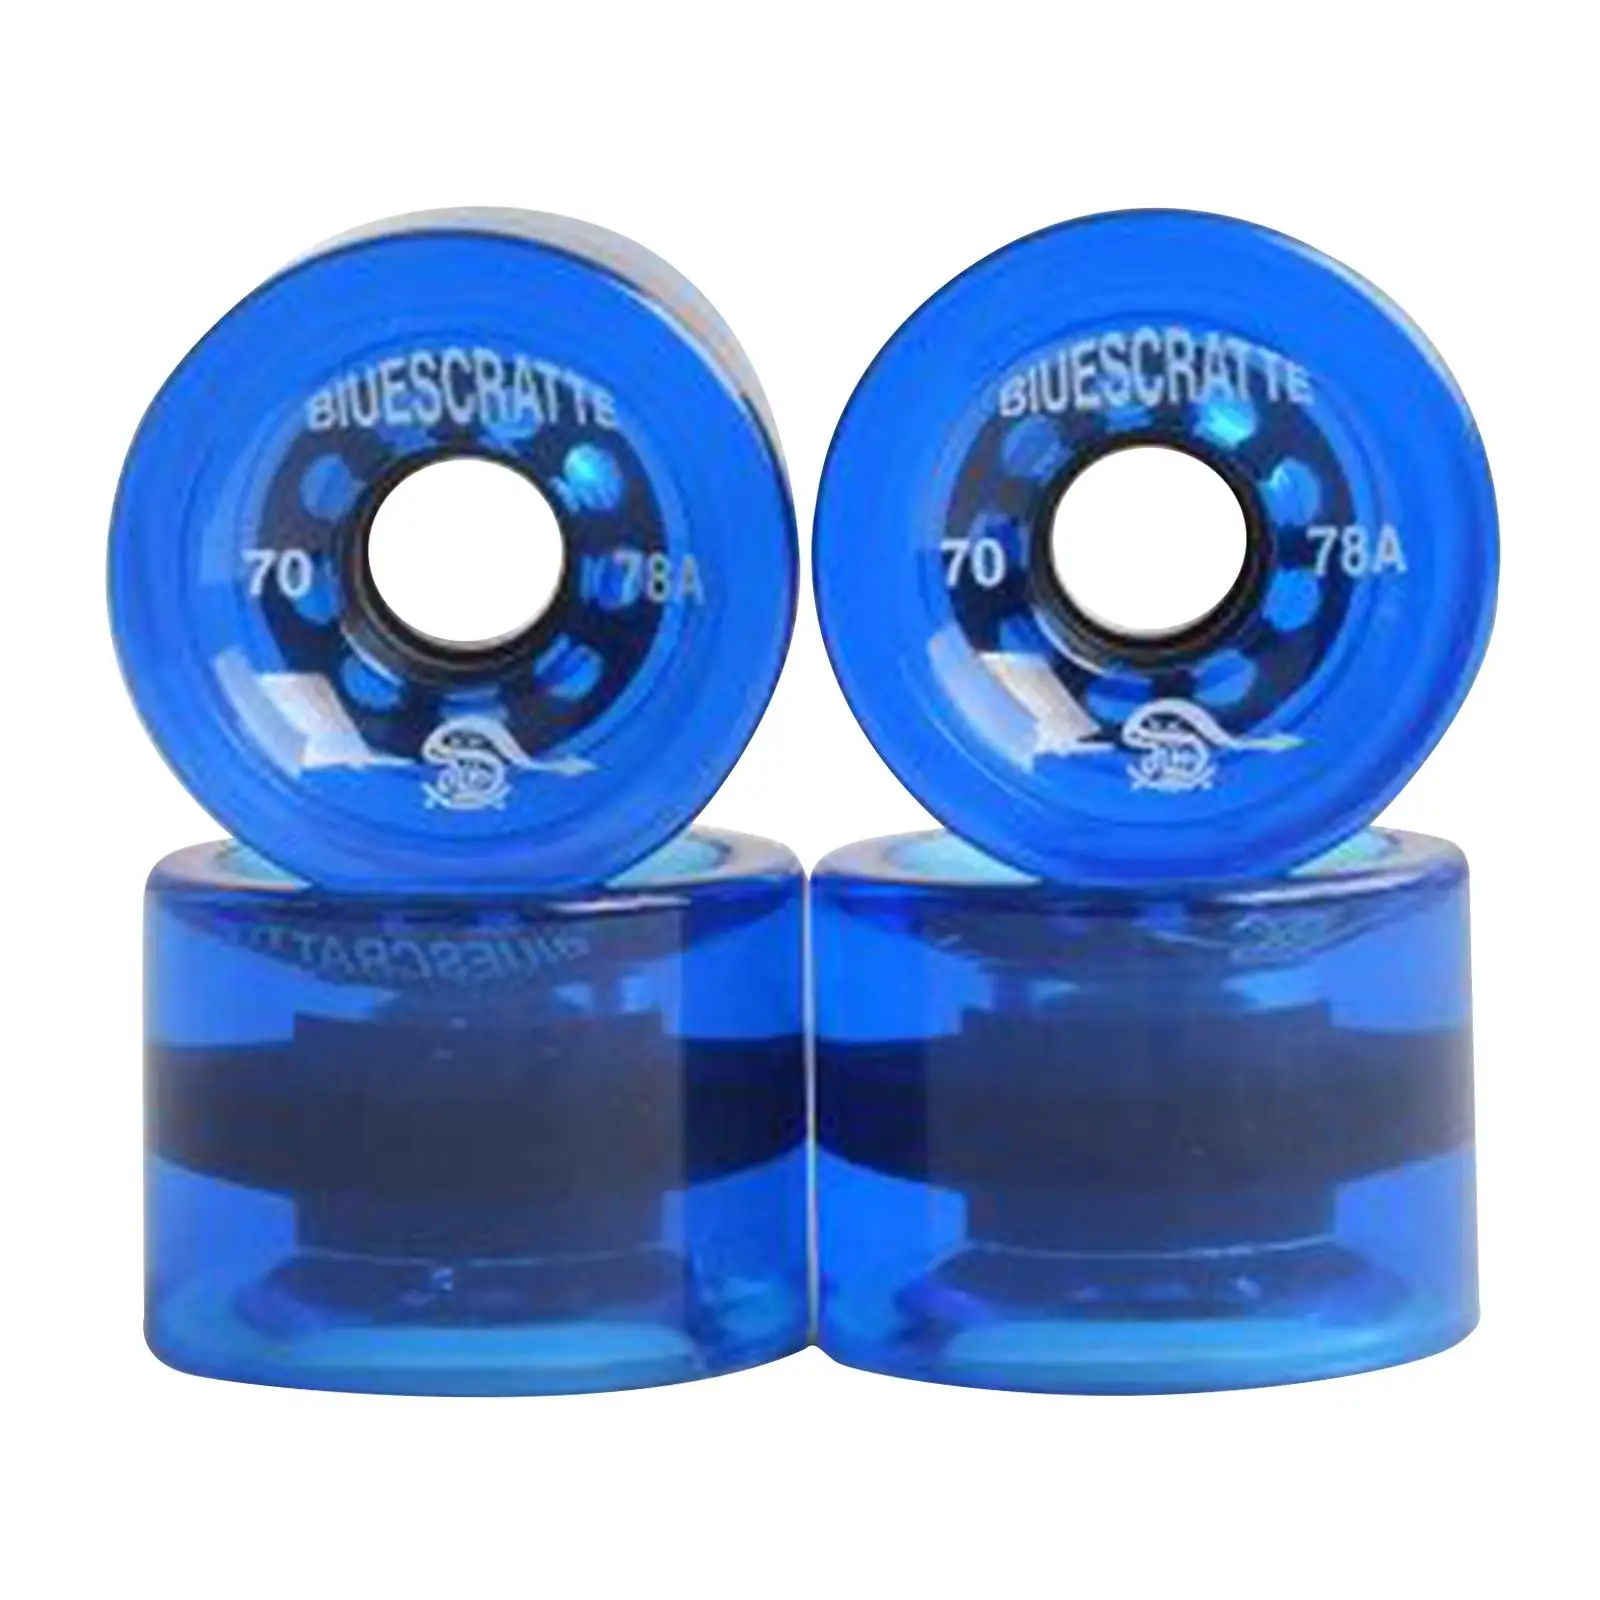 4x Skateboard Wheels PU Roller Repair Maintenance Wheel Parts Accessories